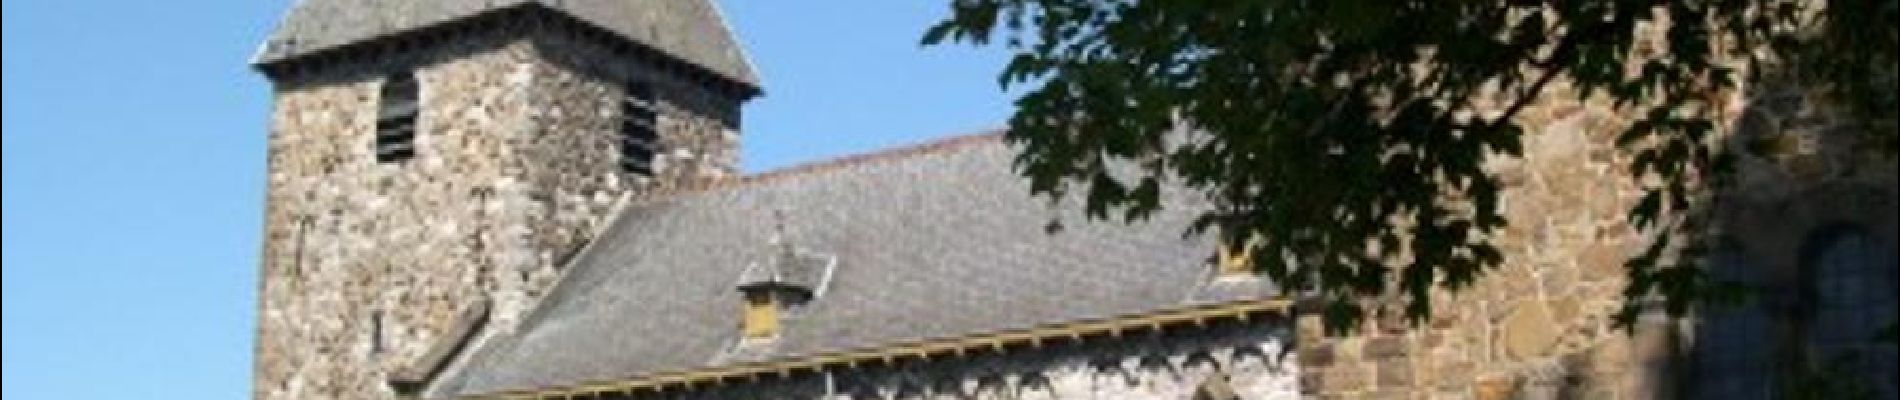 Point of interest Andenne - Eglise Saint-Pierre dite des Sarrasins d'Andenelle - Photo